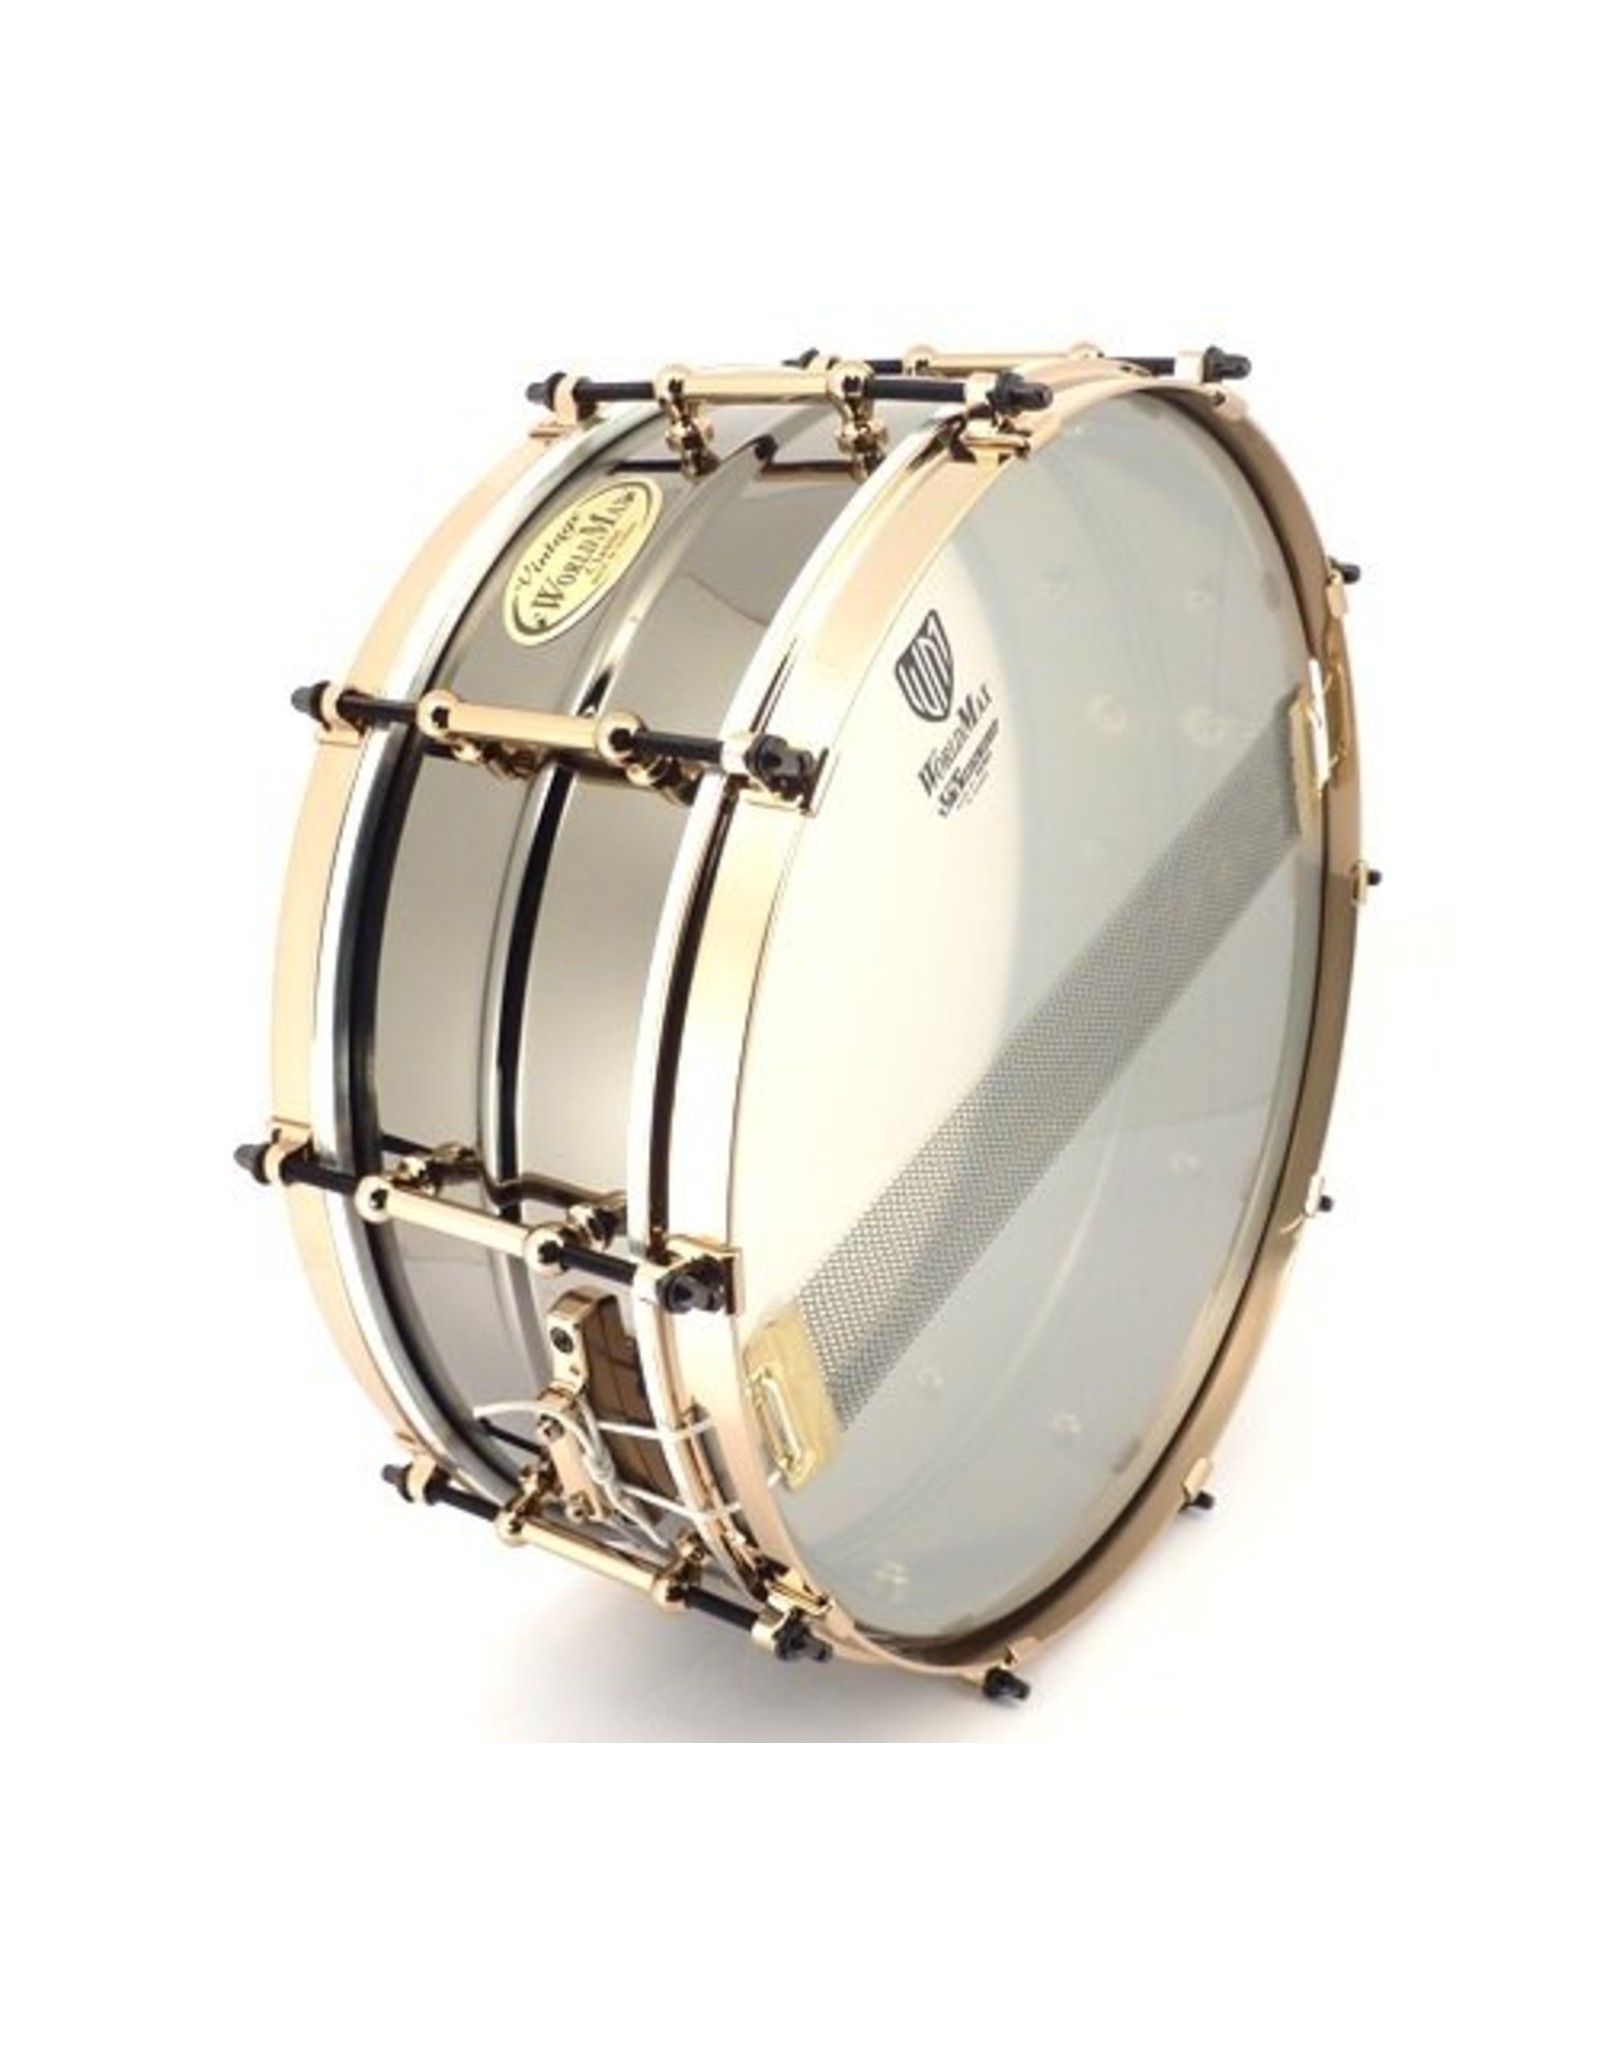 WorldMax Black Dawg 14'' x 6.5'' Hammered Brass Snare Drum at Gear4music